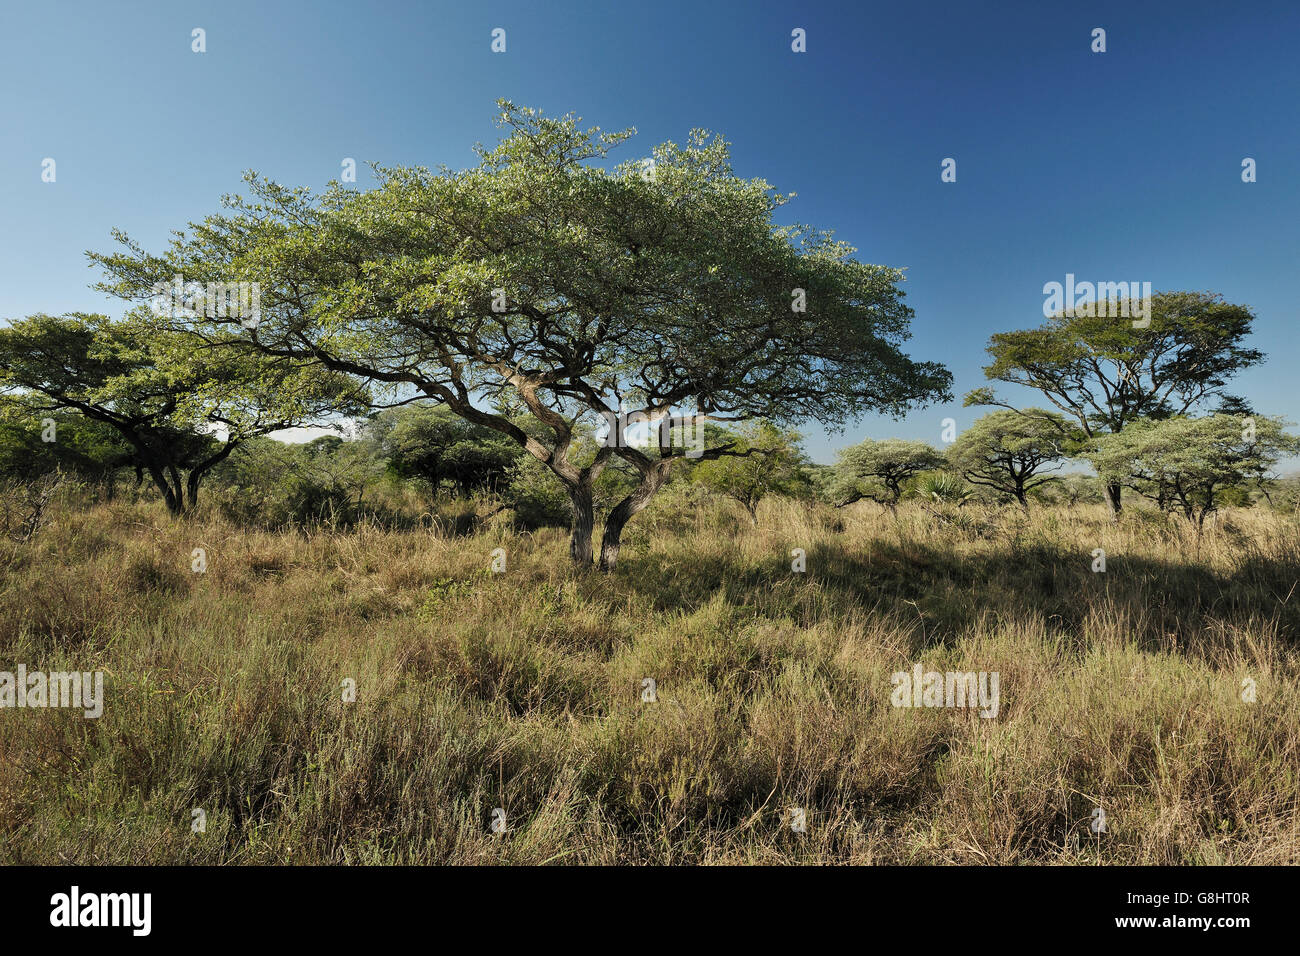 Silver Clusterleaf Tree, Tembe Elephant Park, Maputaland, KwaZulu Natal, South Africa. Stock Photo